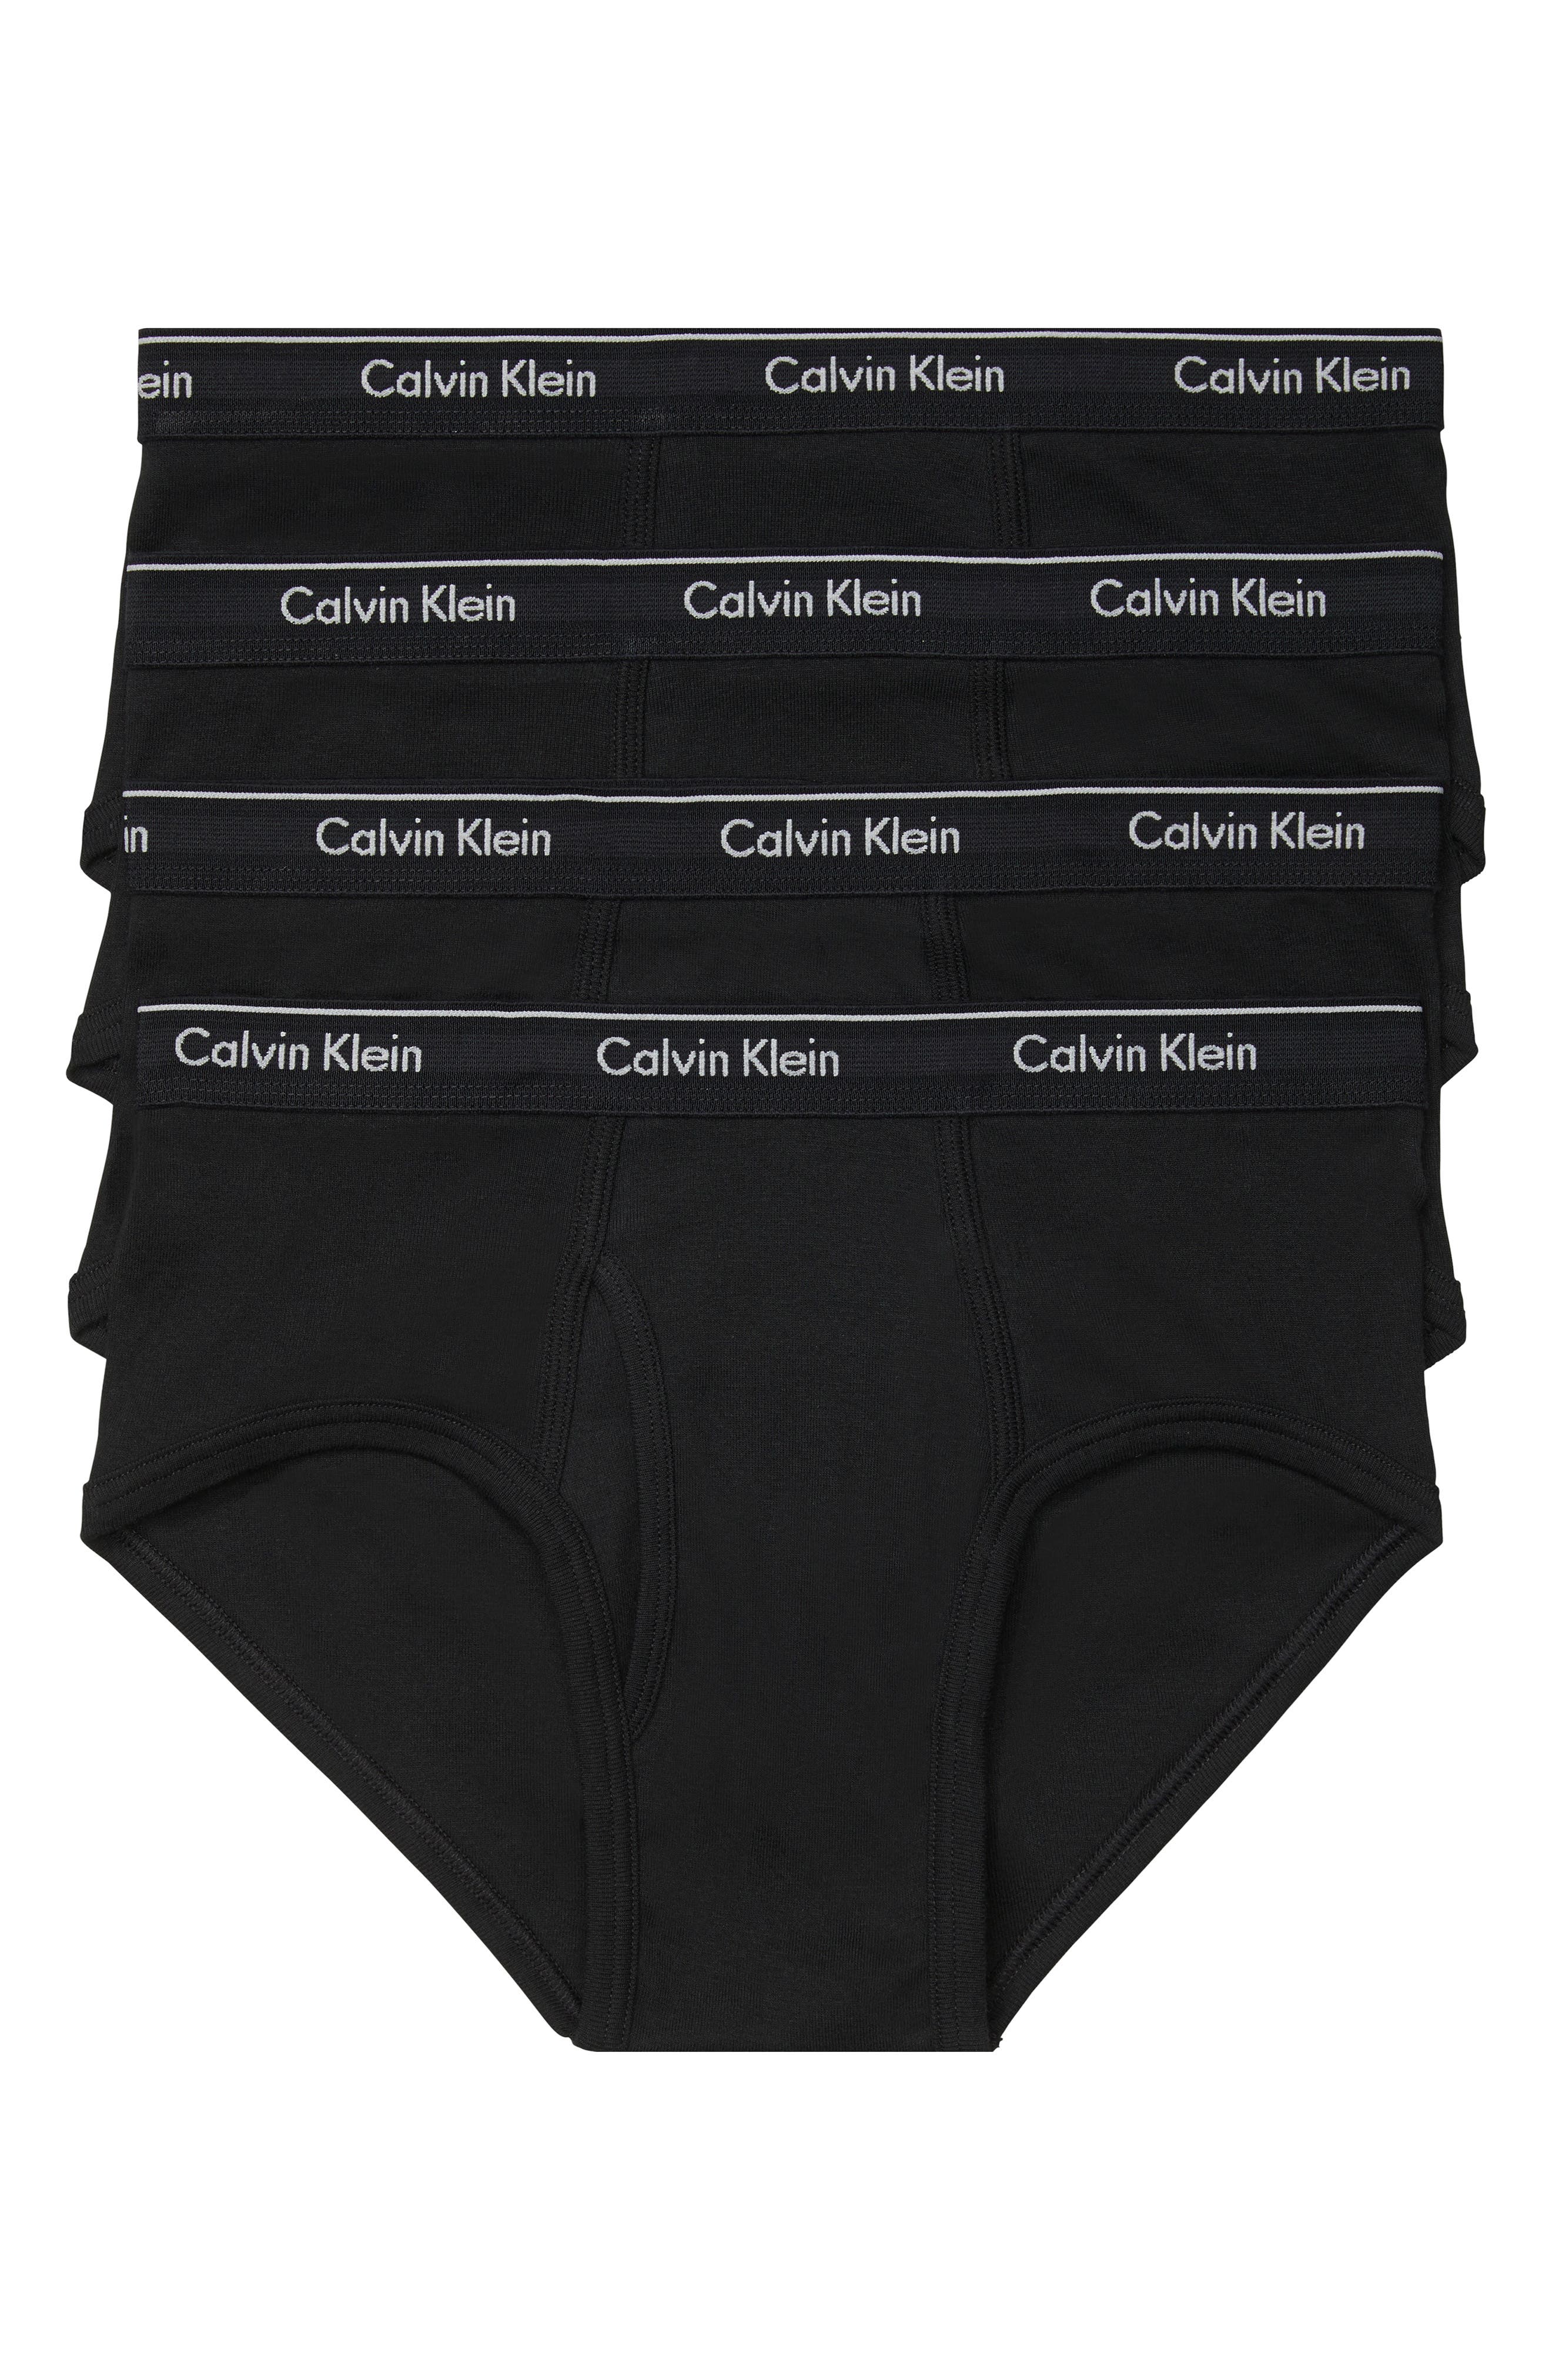 UPC 790812524008 product image for Men's Big & Tall Calvin Klein Men's Cotton Classics 3-Pack Briefs, Size 3XB - Bl | upcitemdb.com